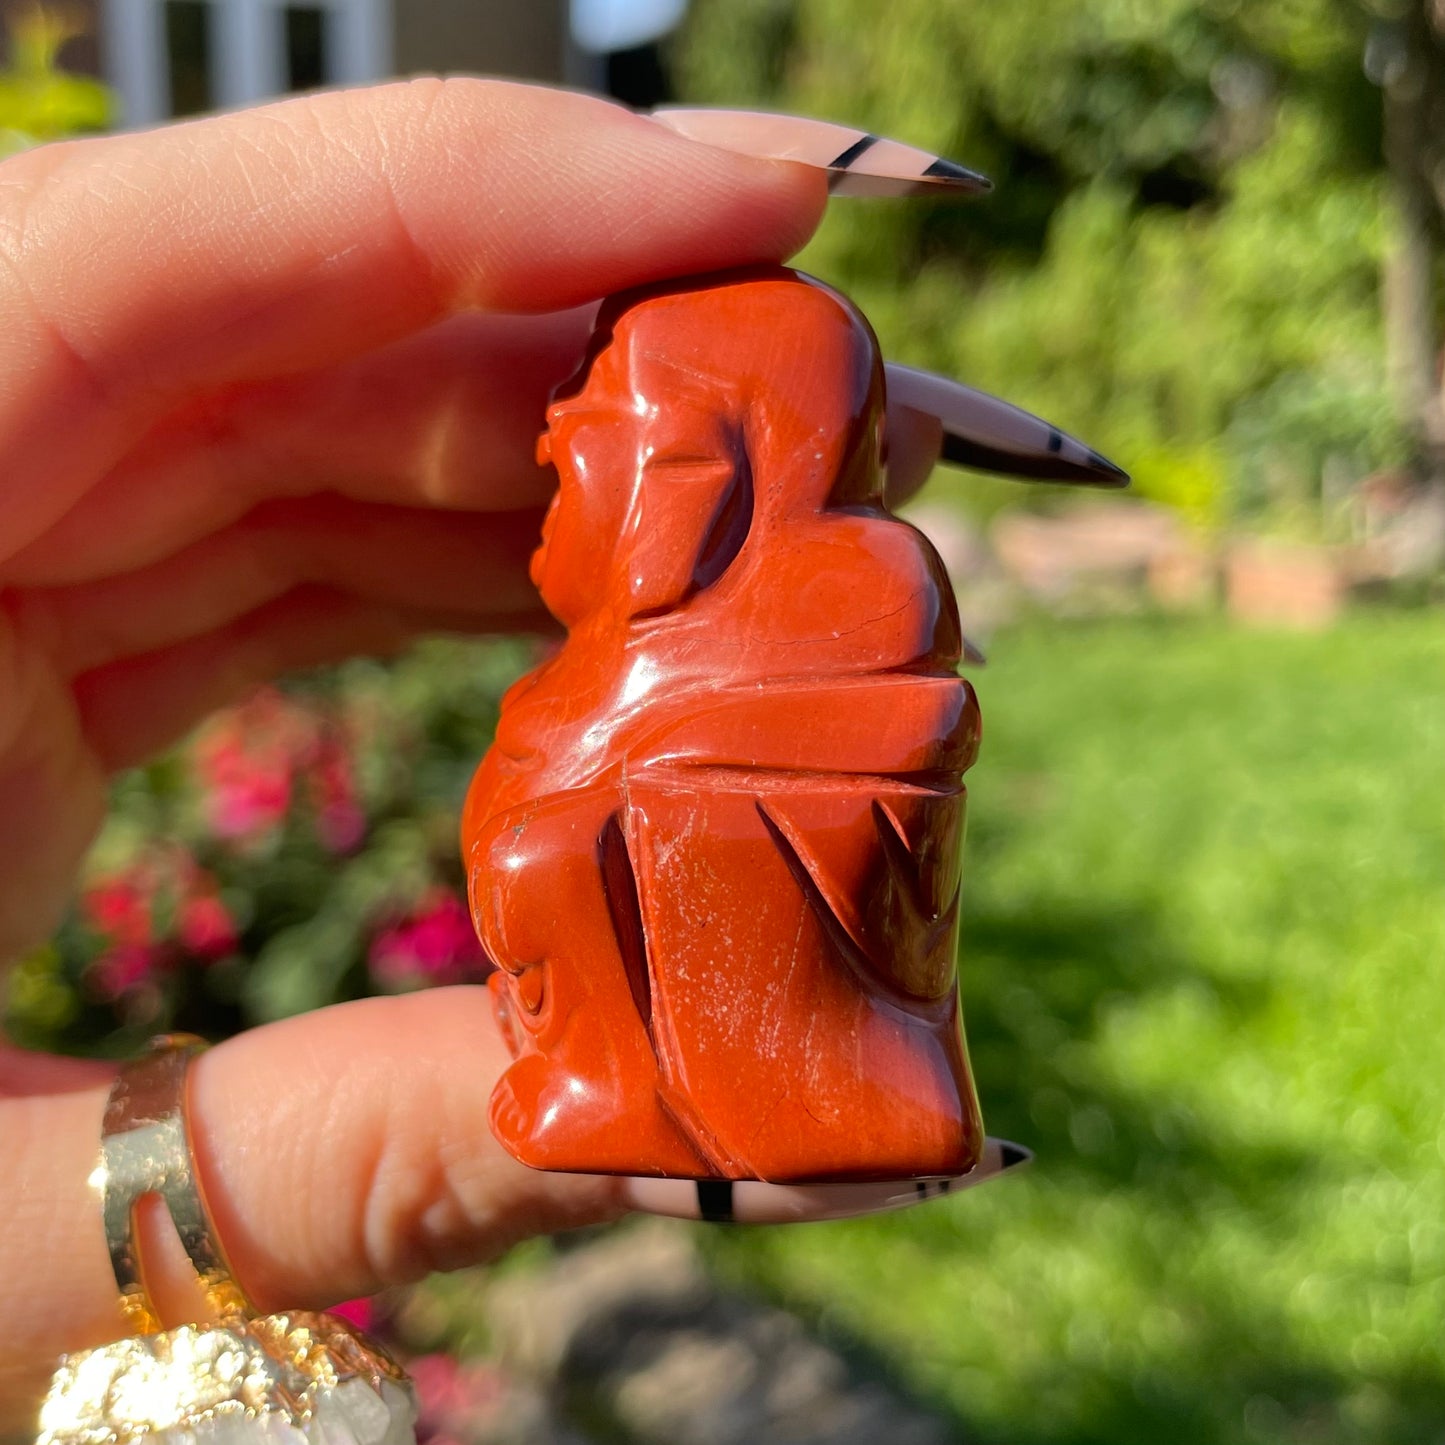 Red Jasper Buddha (2 Inches)